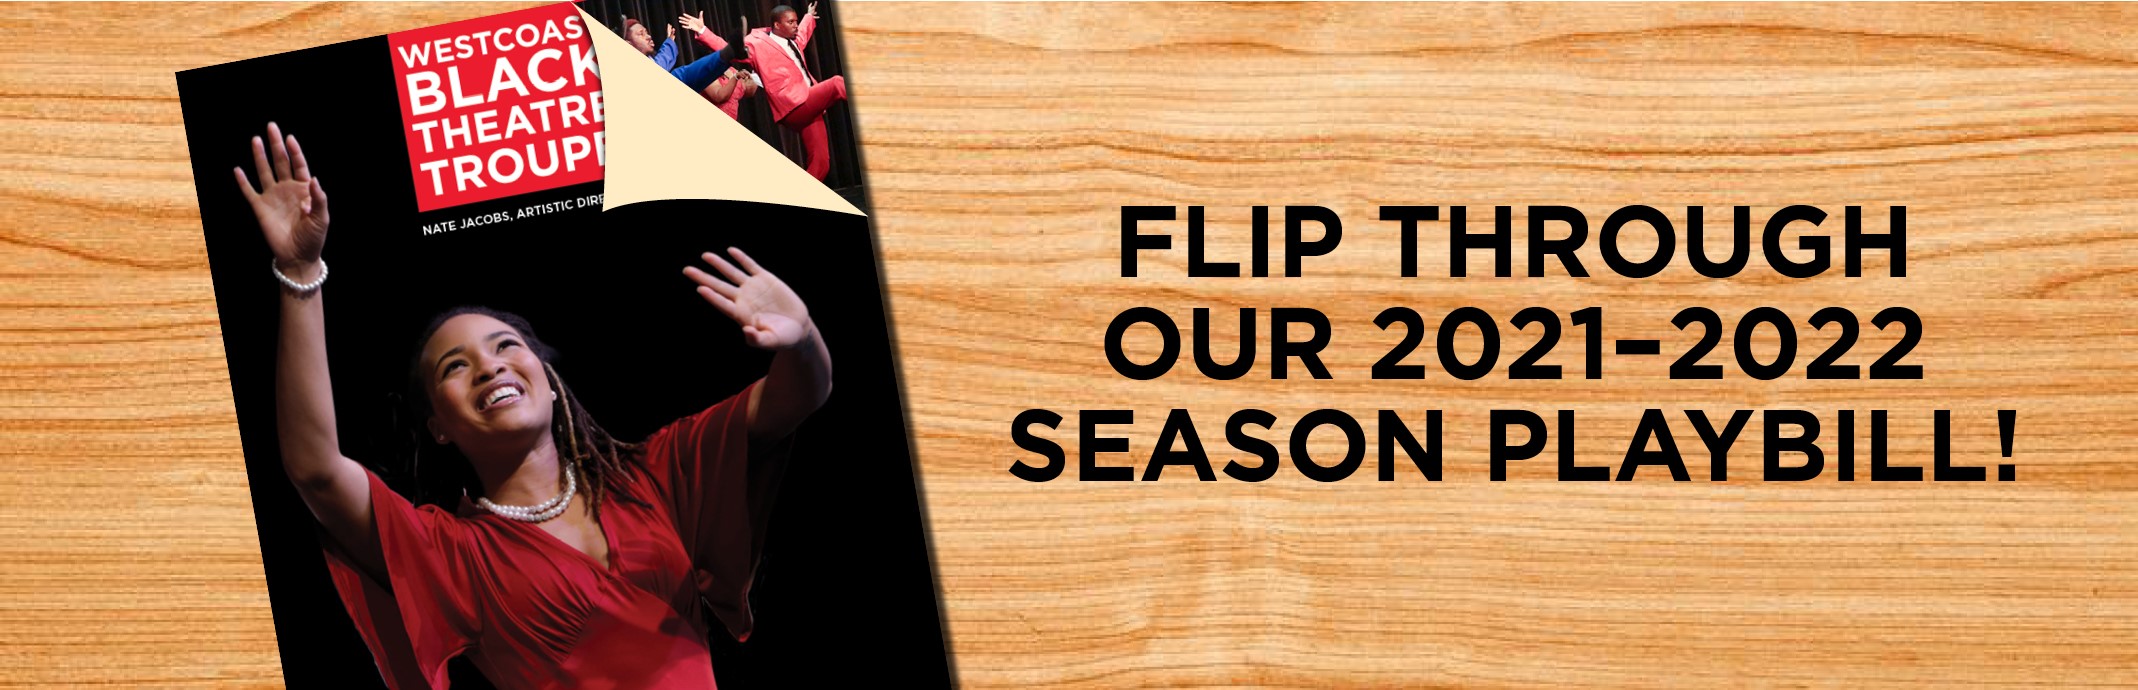 Flip Through Our 2021-2022 Season Playbill!